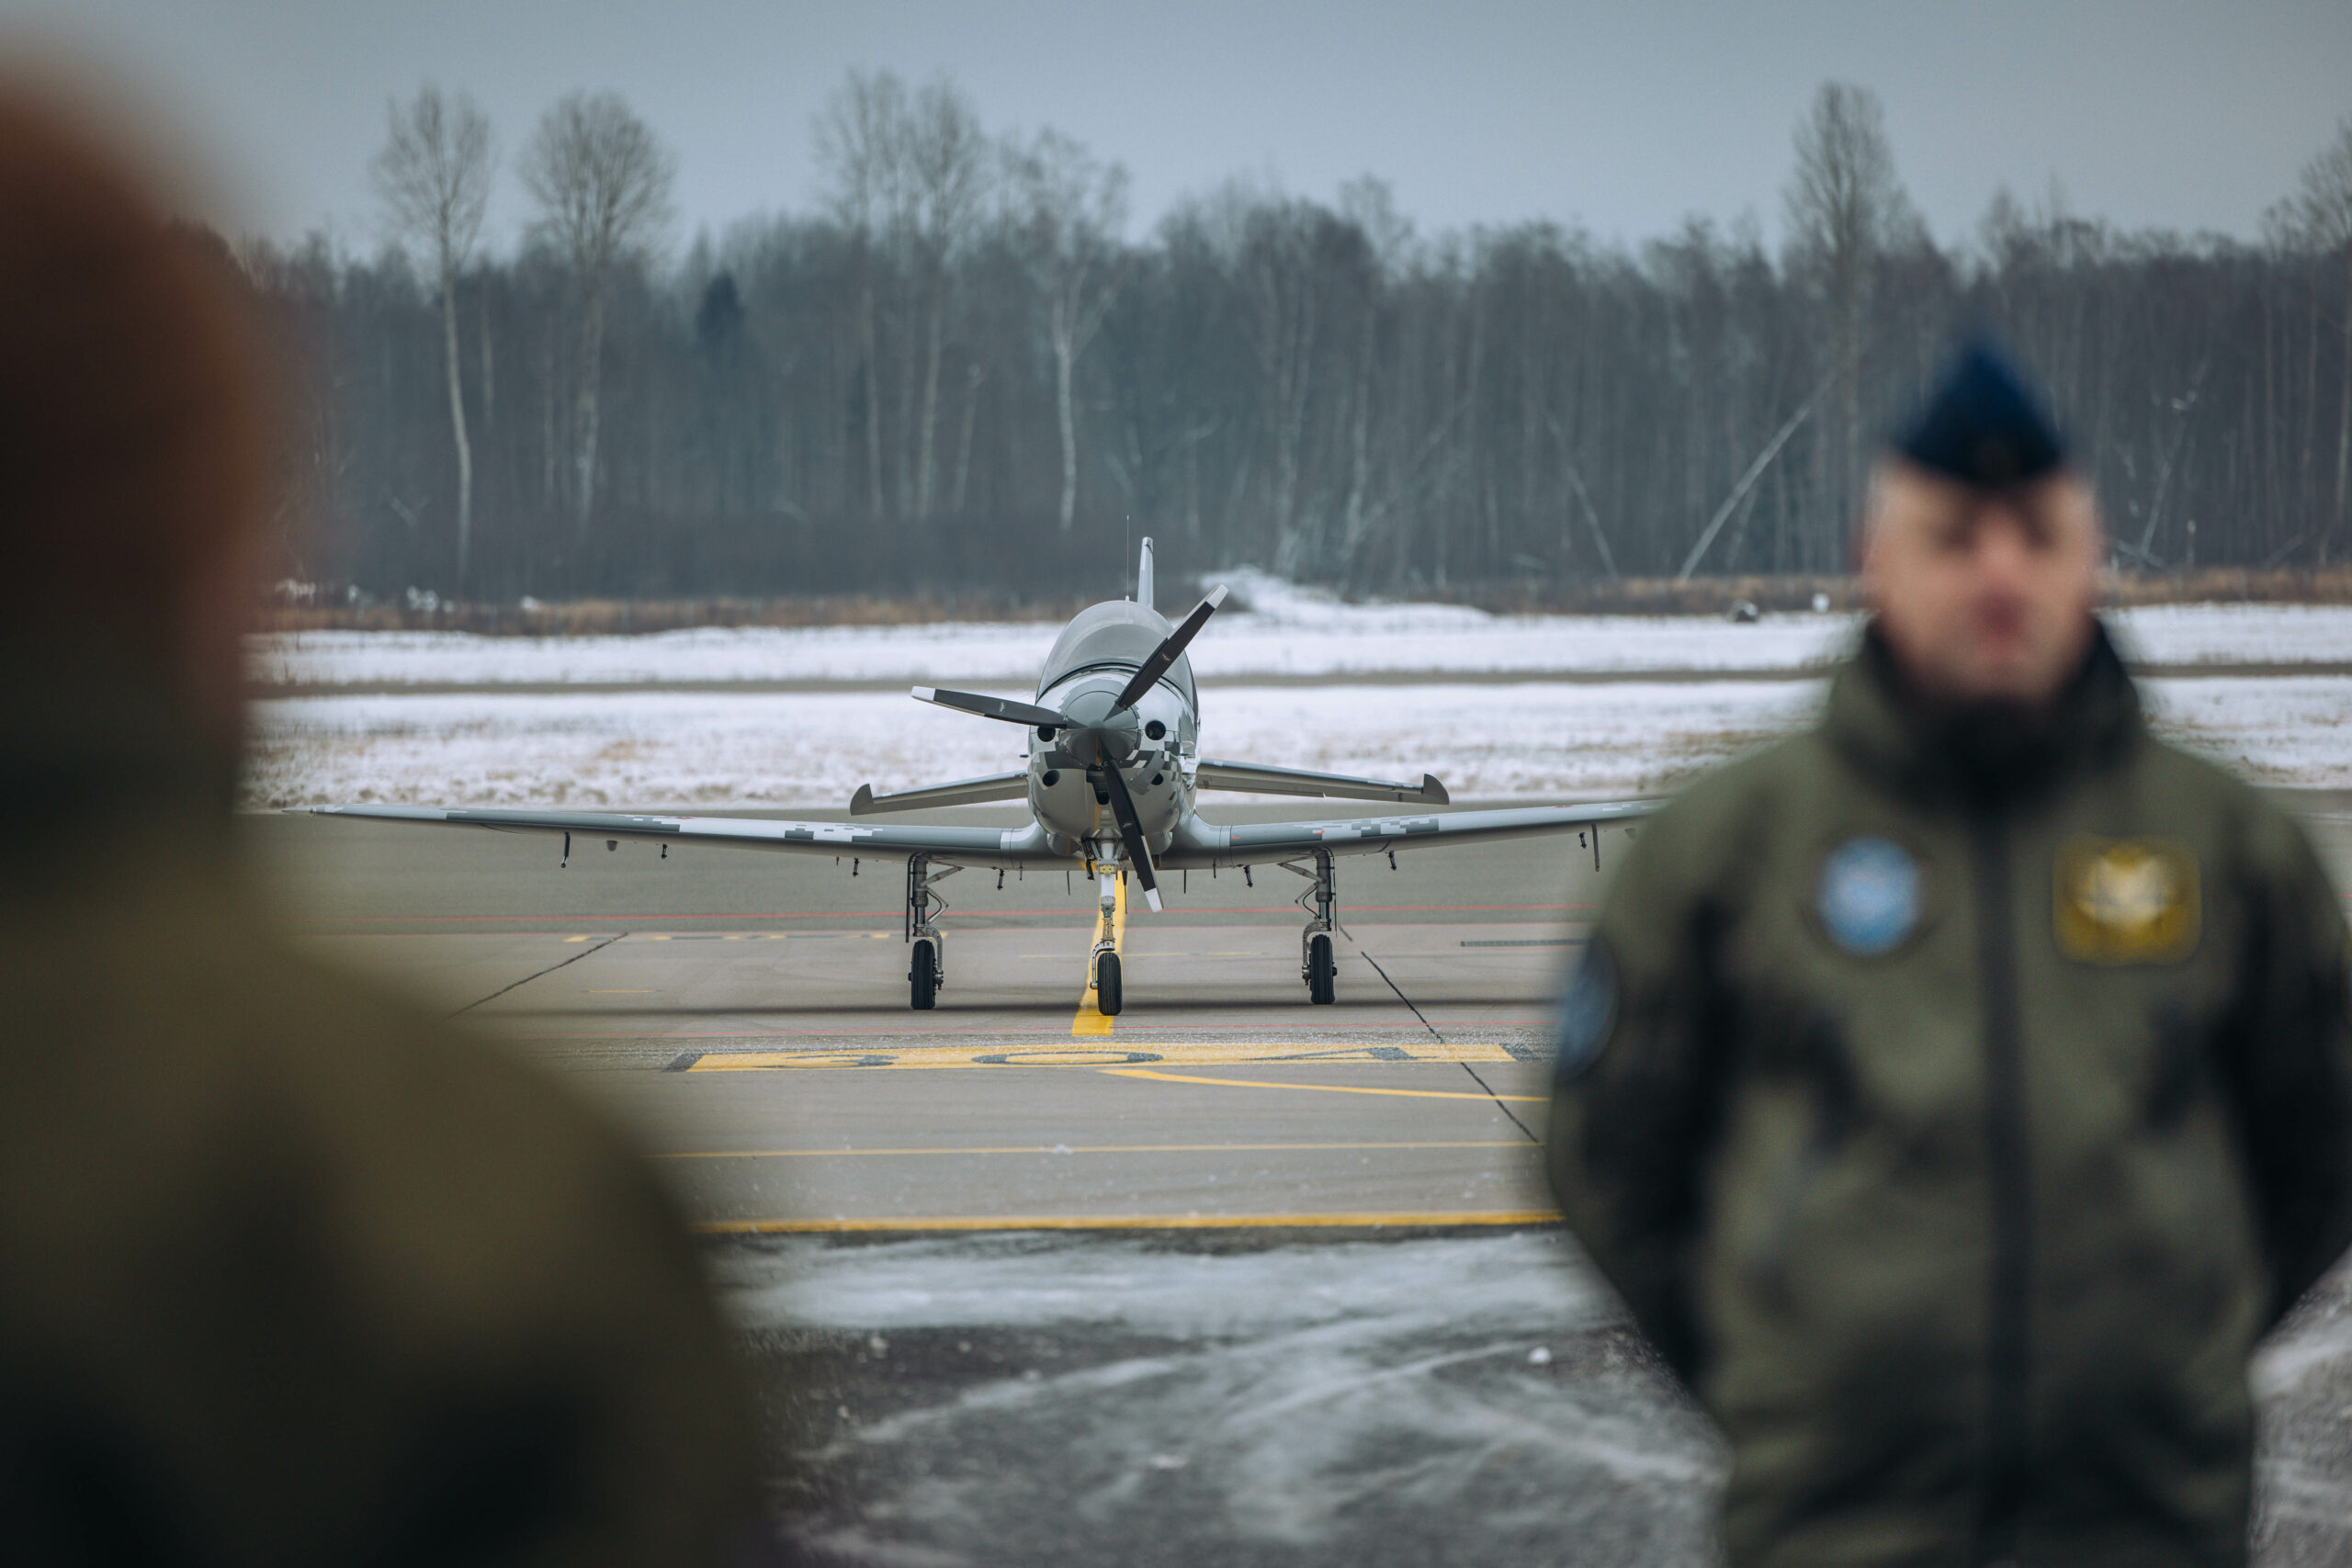 Latvian Air Force's Pelegrin Tarragon trainer aircraft